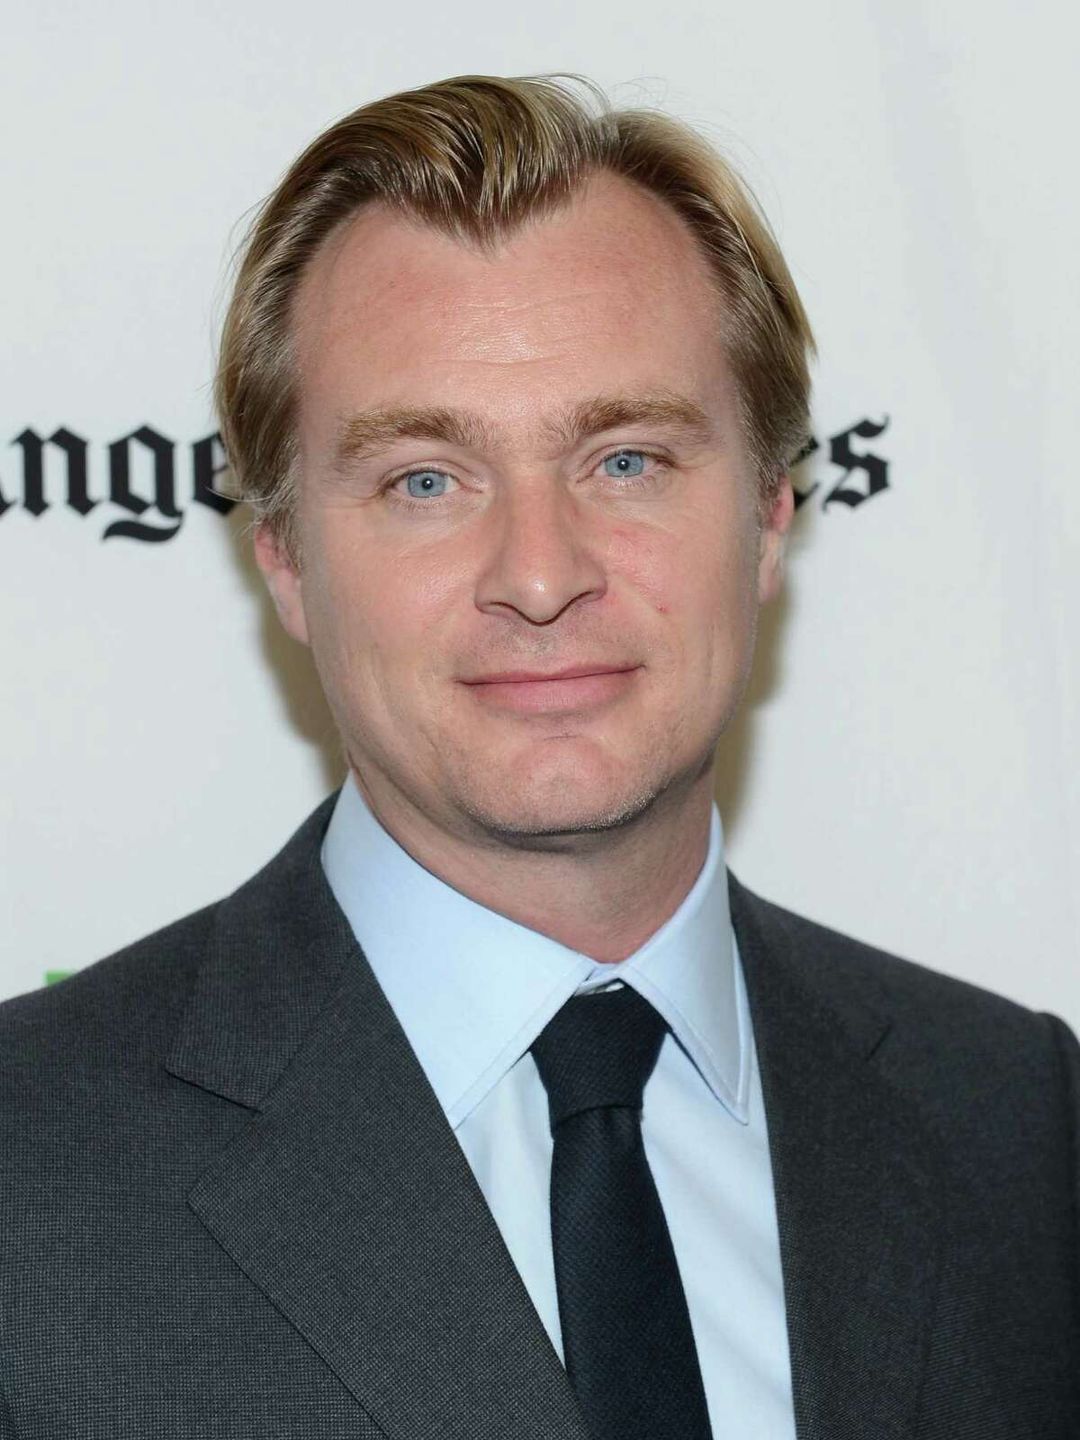 Christopher Nolan story of success